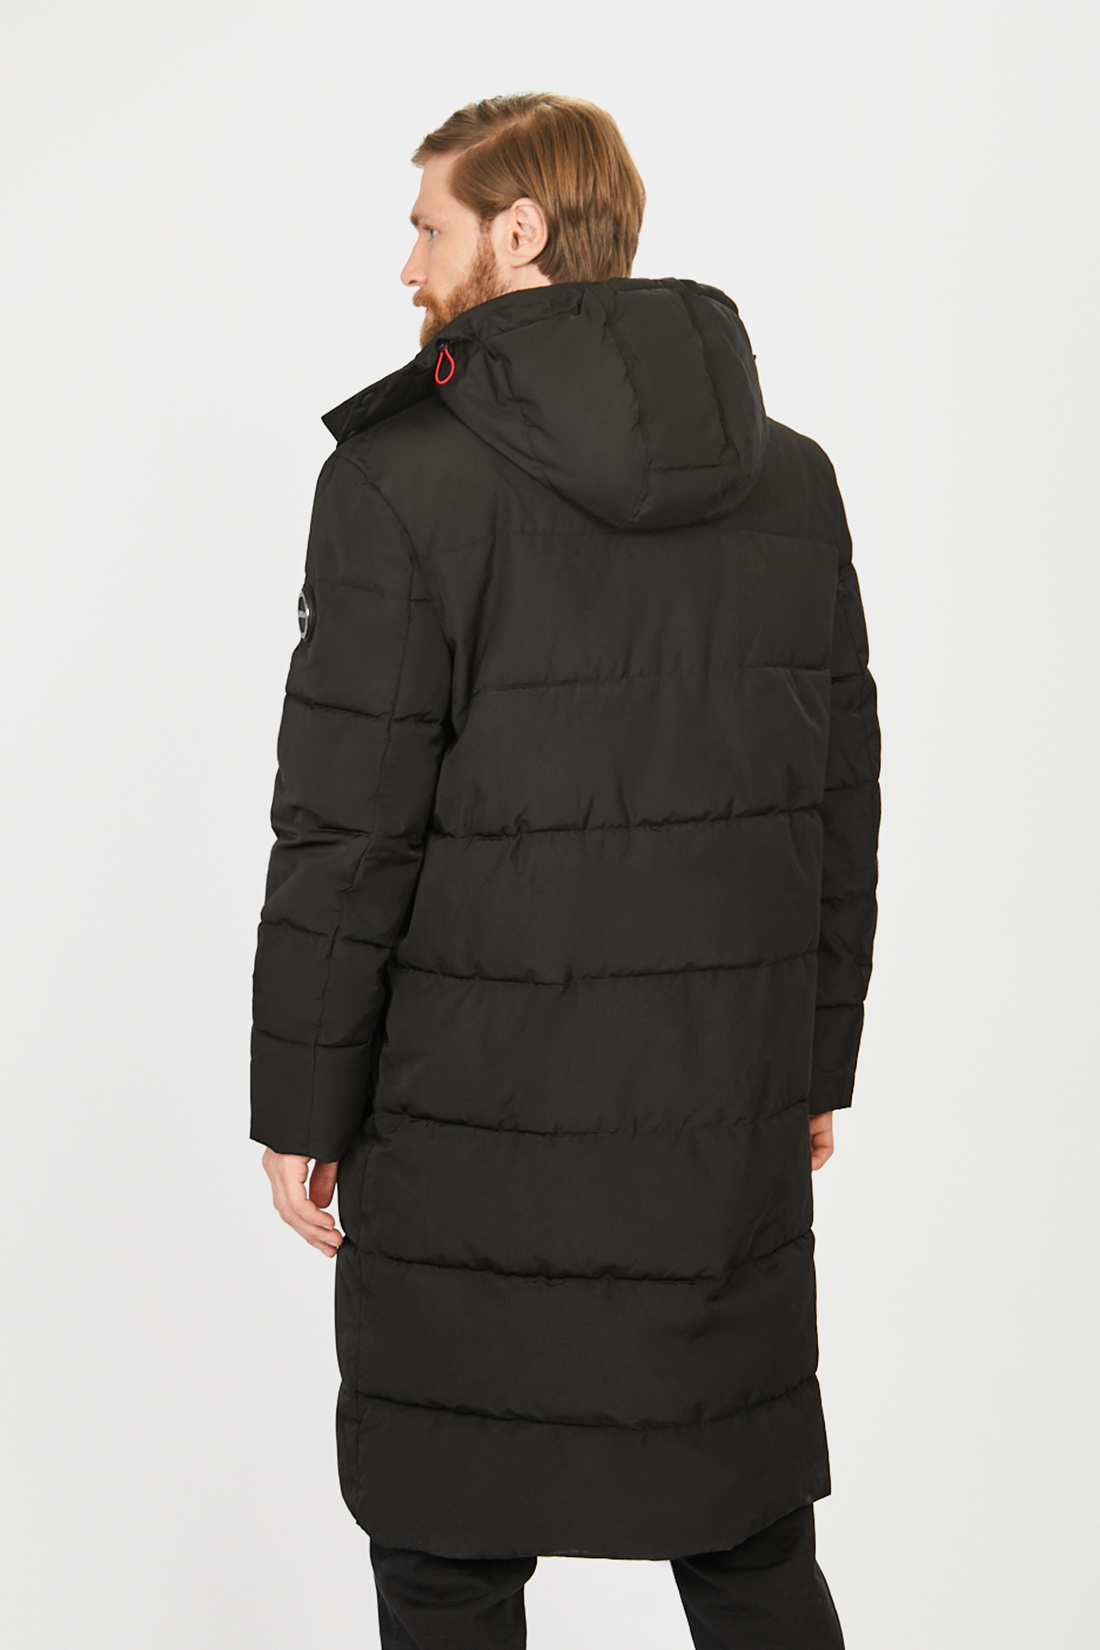 Куртка (Эко пух) (арт. baon B541506), размер M, цвет черный Куртка (Эко пух) (арт. baon B541506) - фото 2